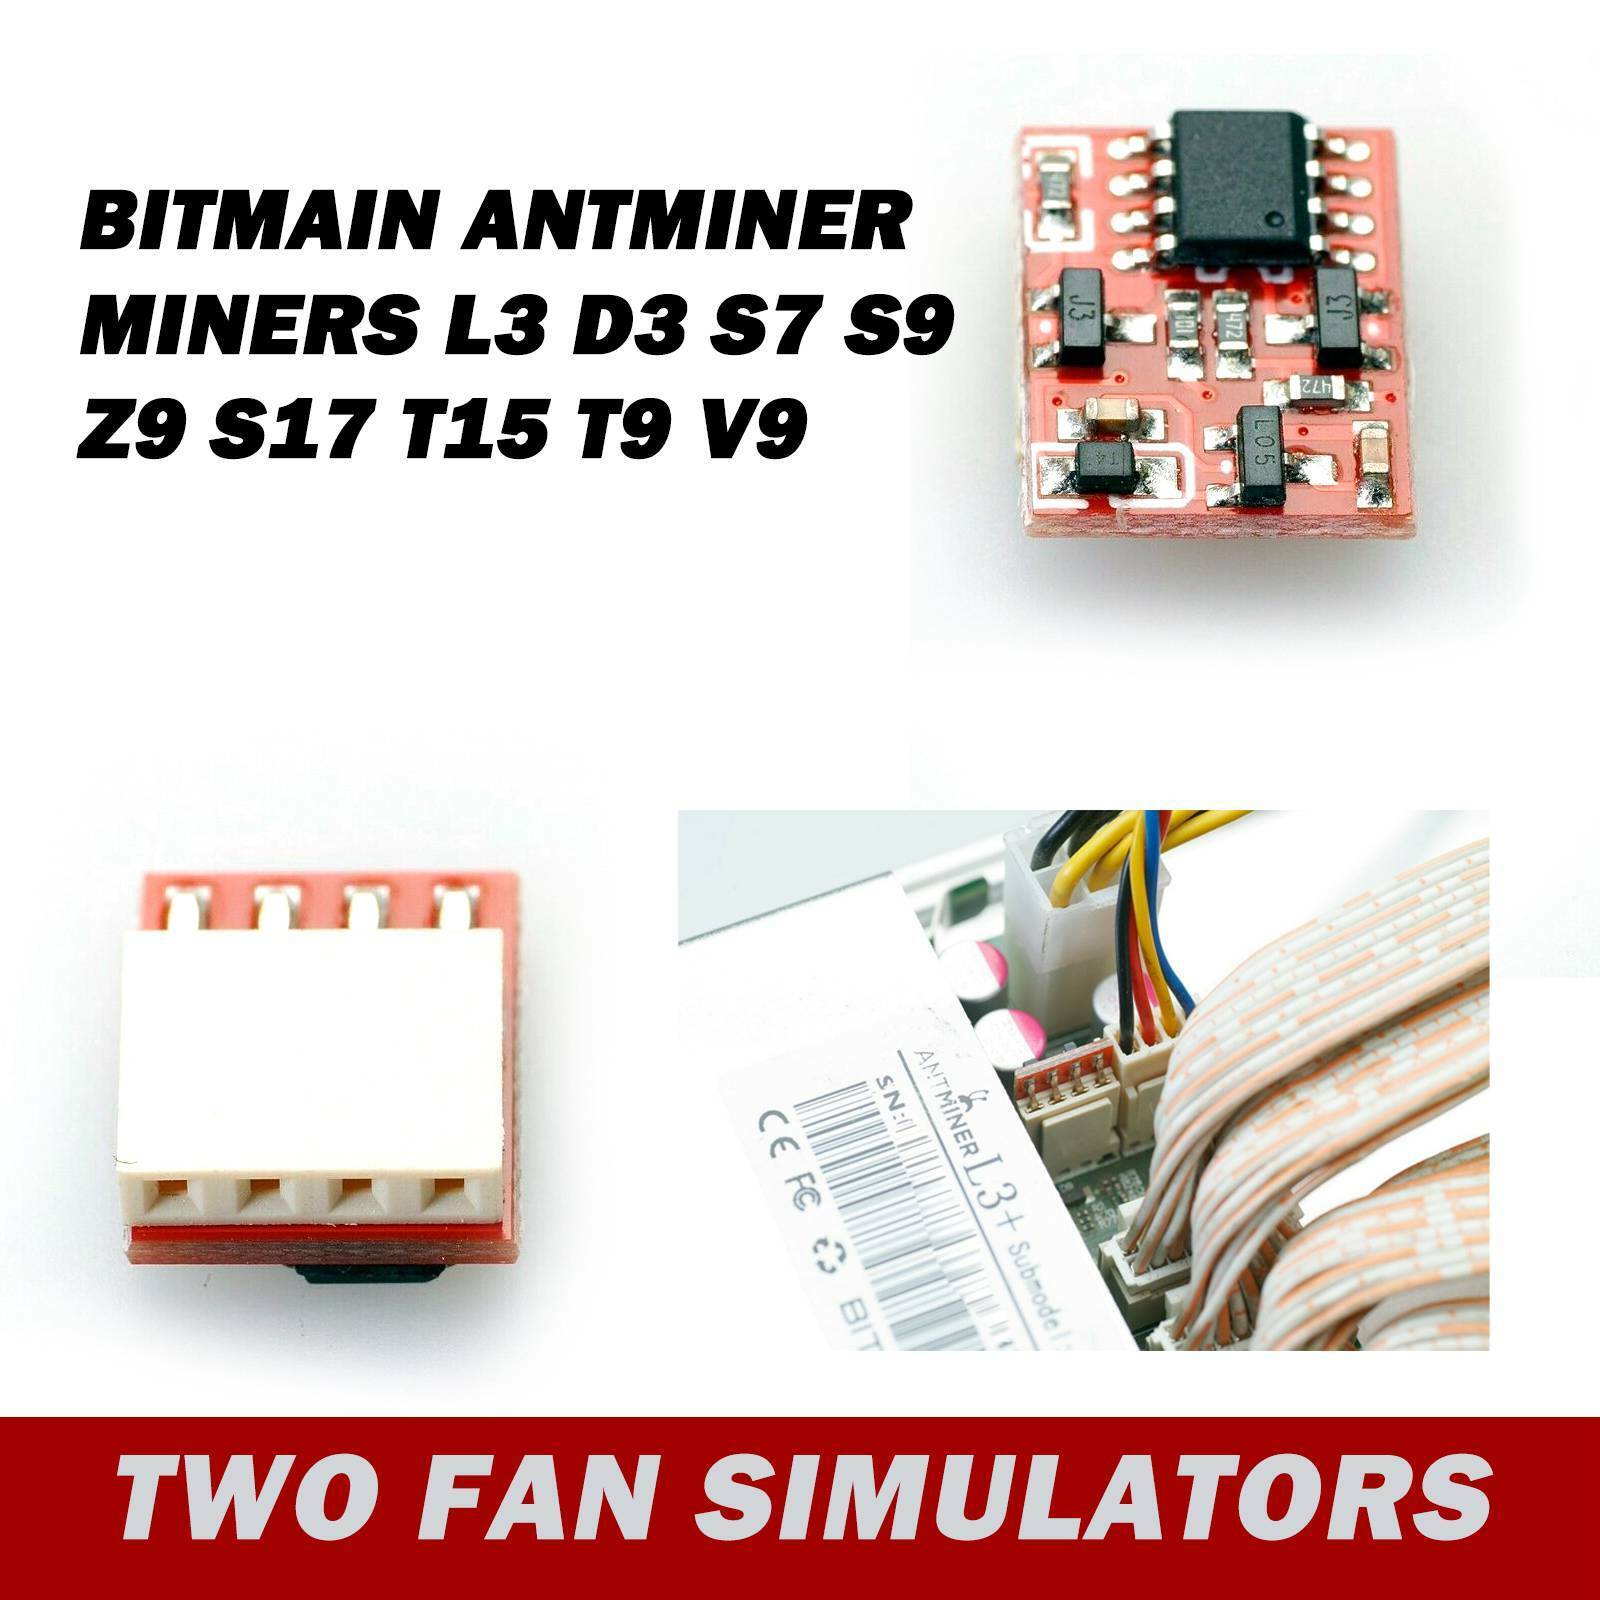 2Pcs Fan Simulators fit Bitmain Antminer Miner L3 D3 S7 S9 Z9 S17 T15 T9 V9 Unbranded Does not apply